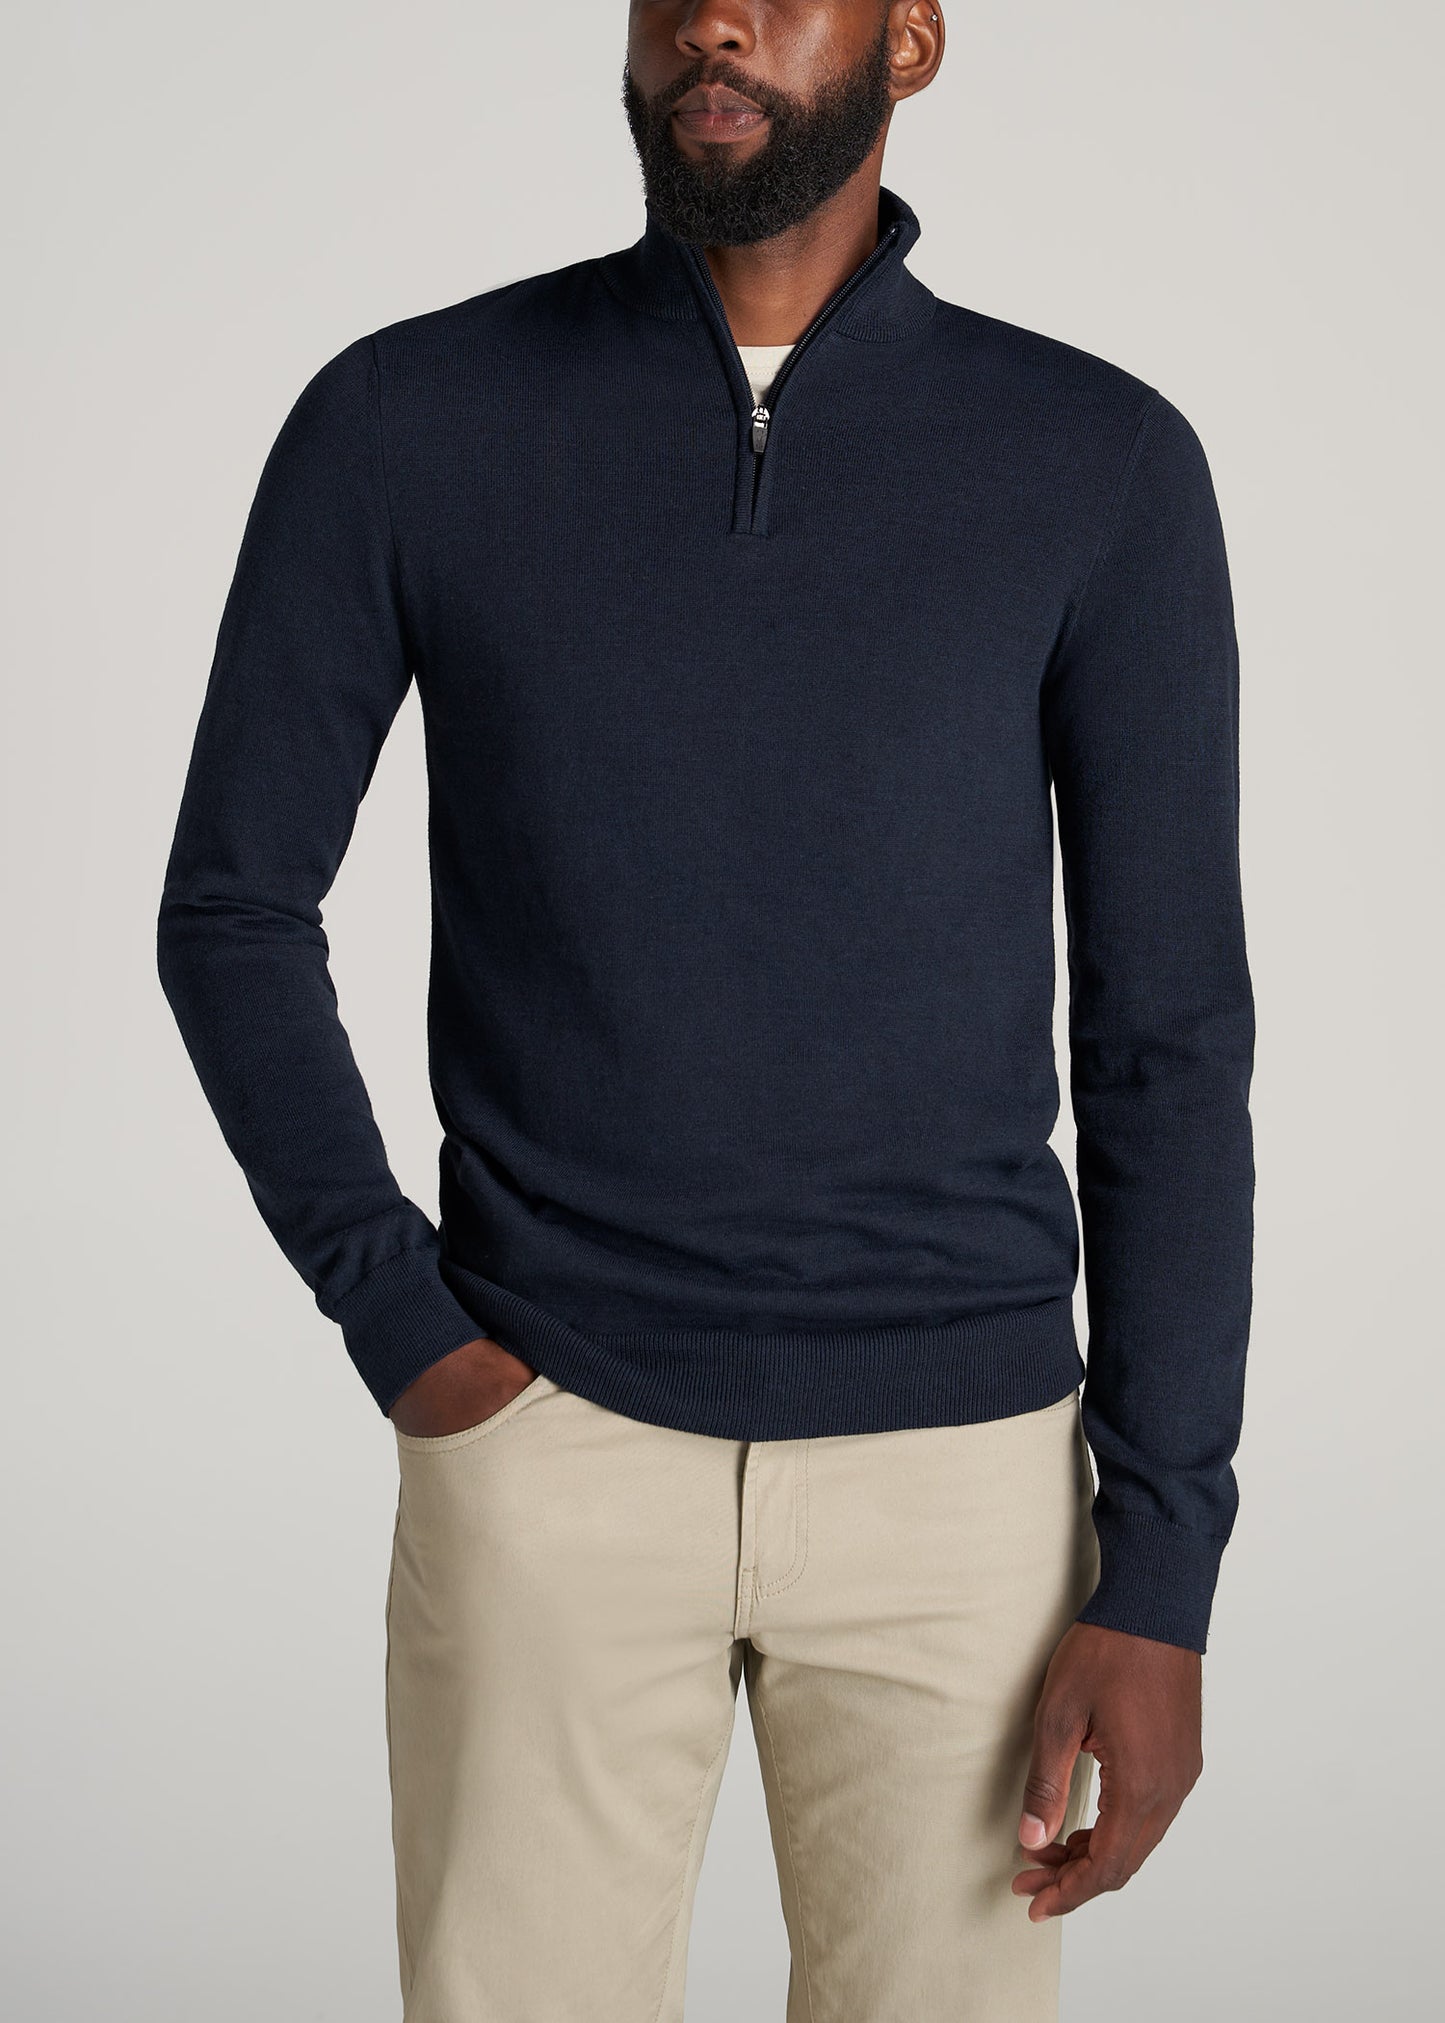 Everyday Quarter-Zip Tall Men's Sweater in Patriot Blue